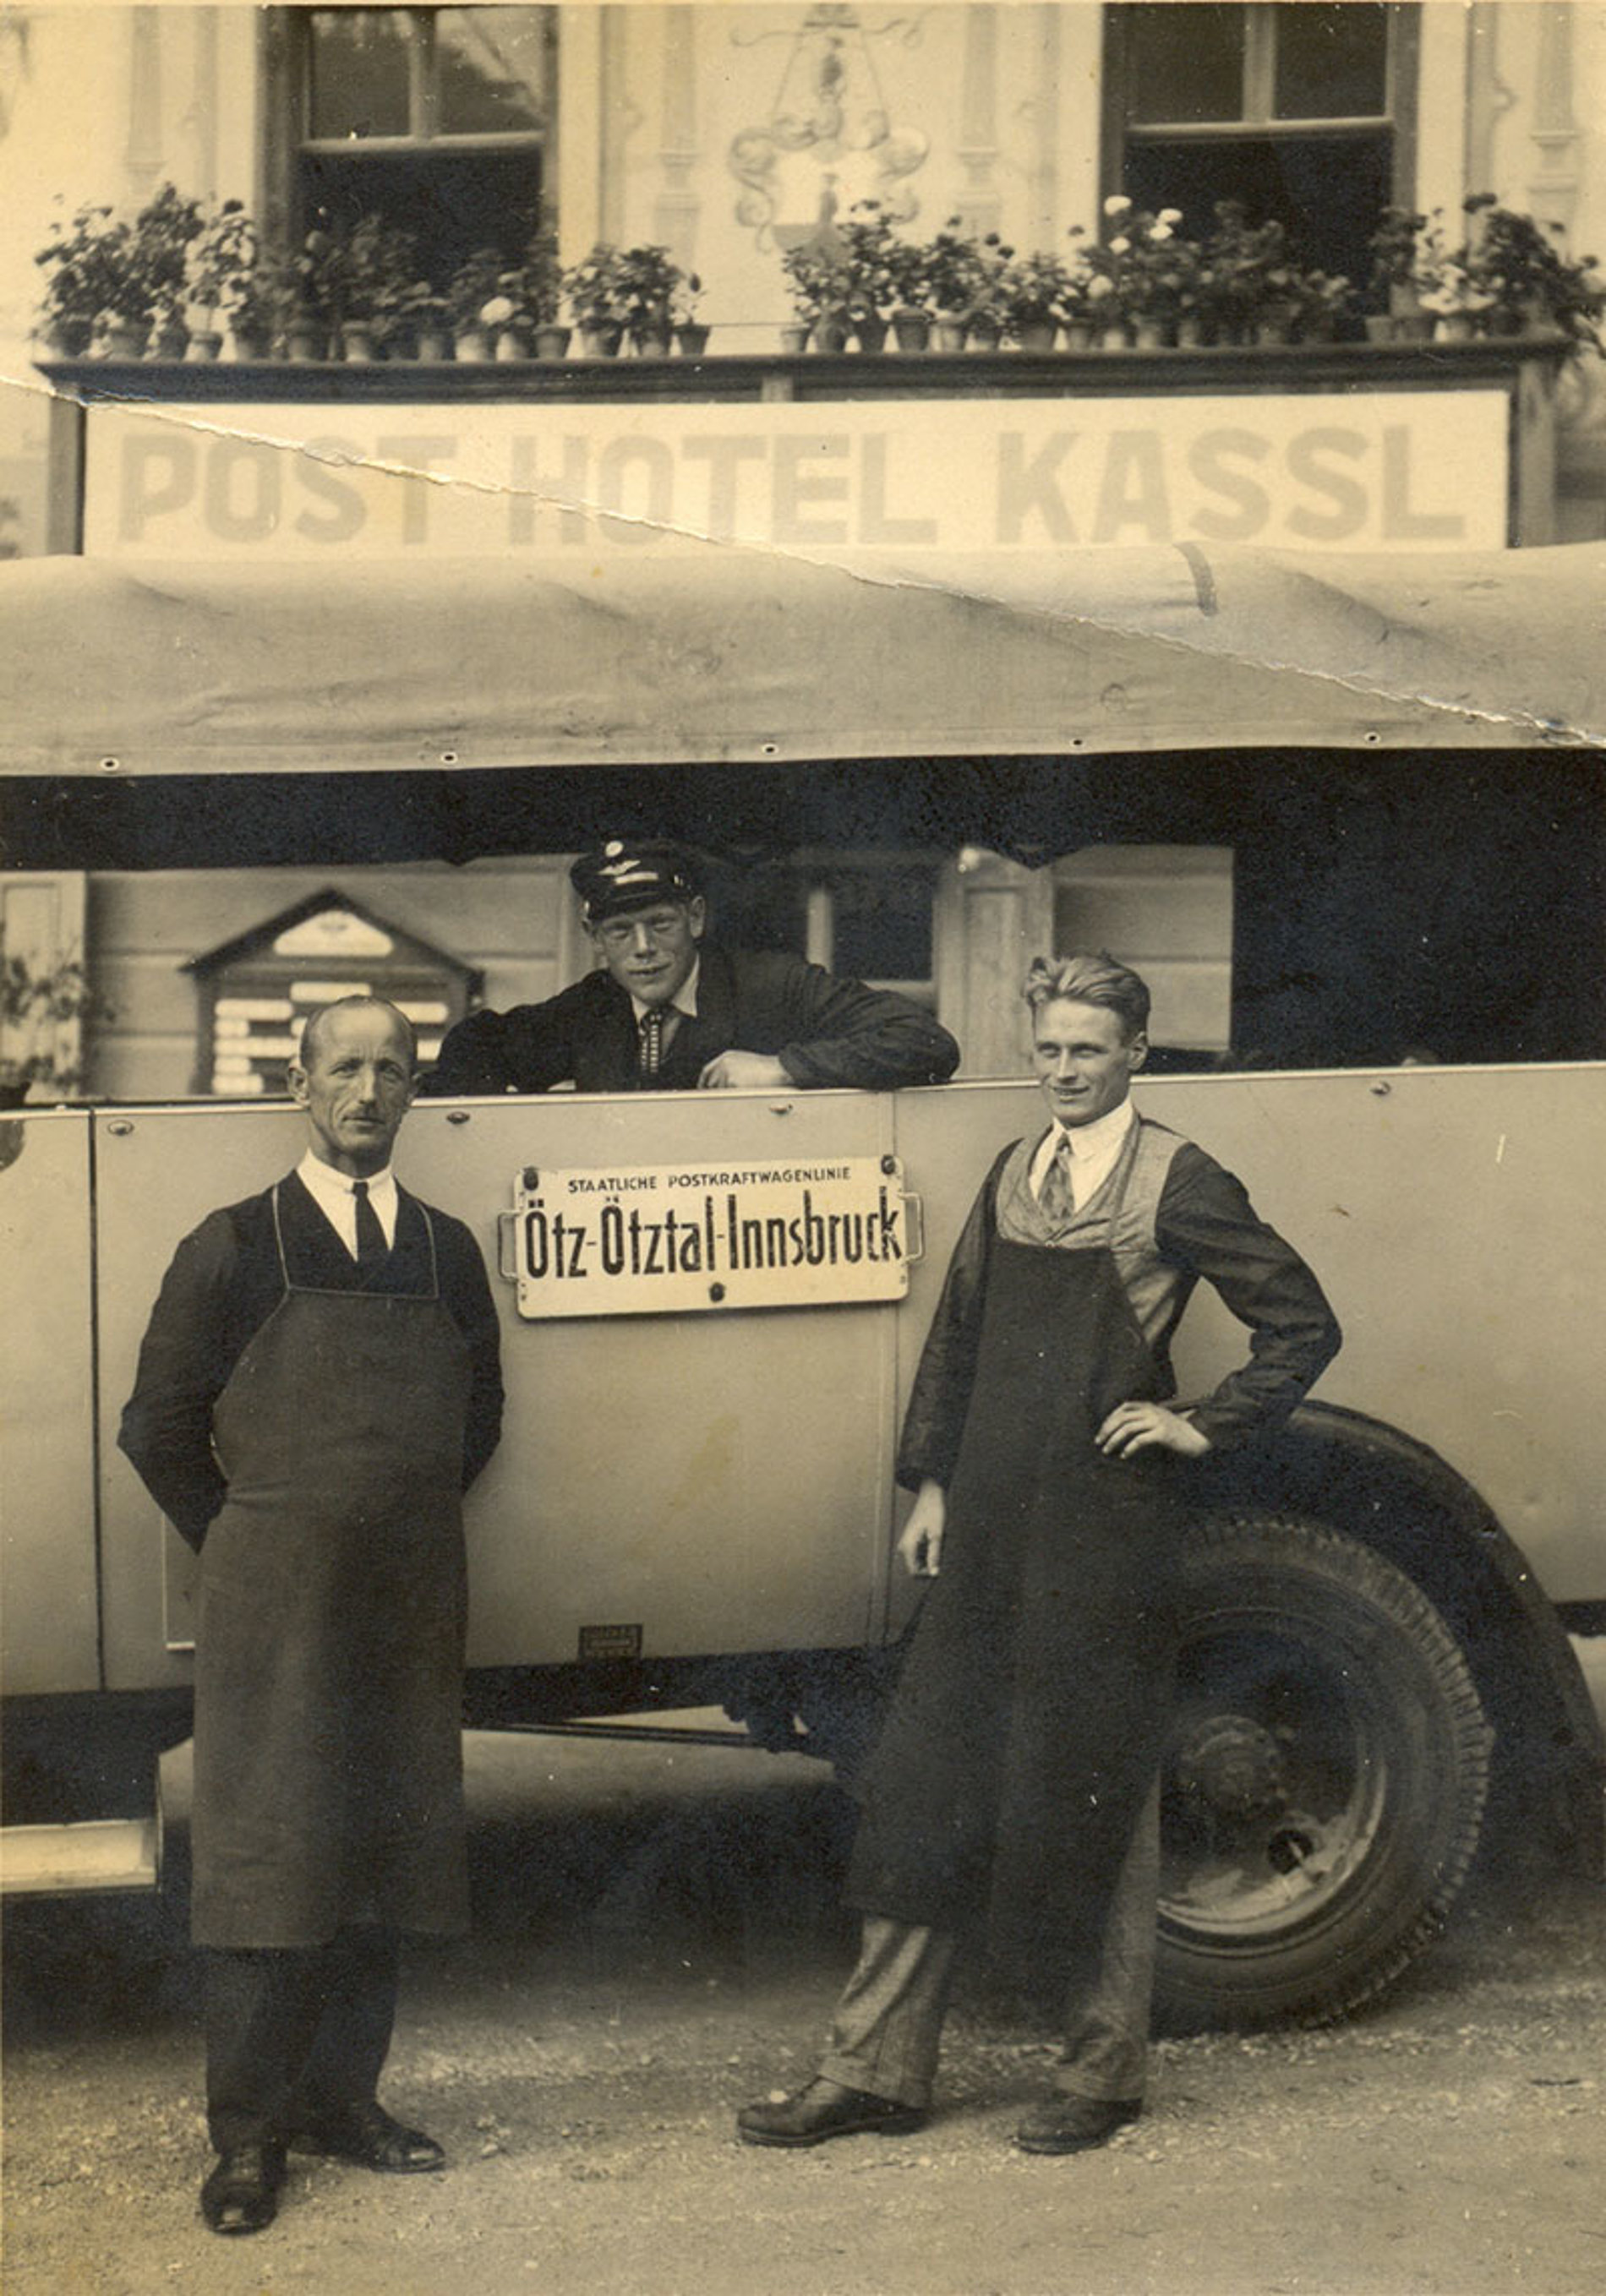 Posthotel Kassl in Oetz